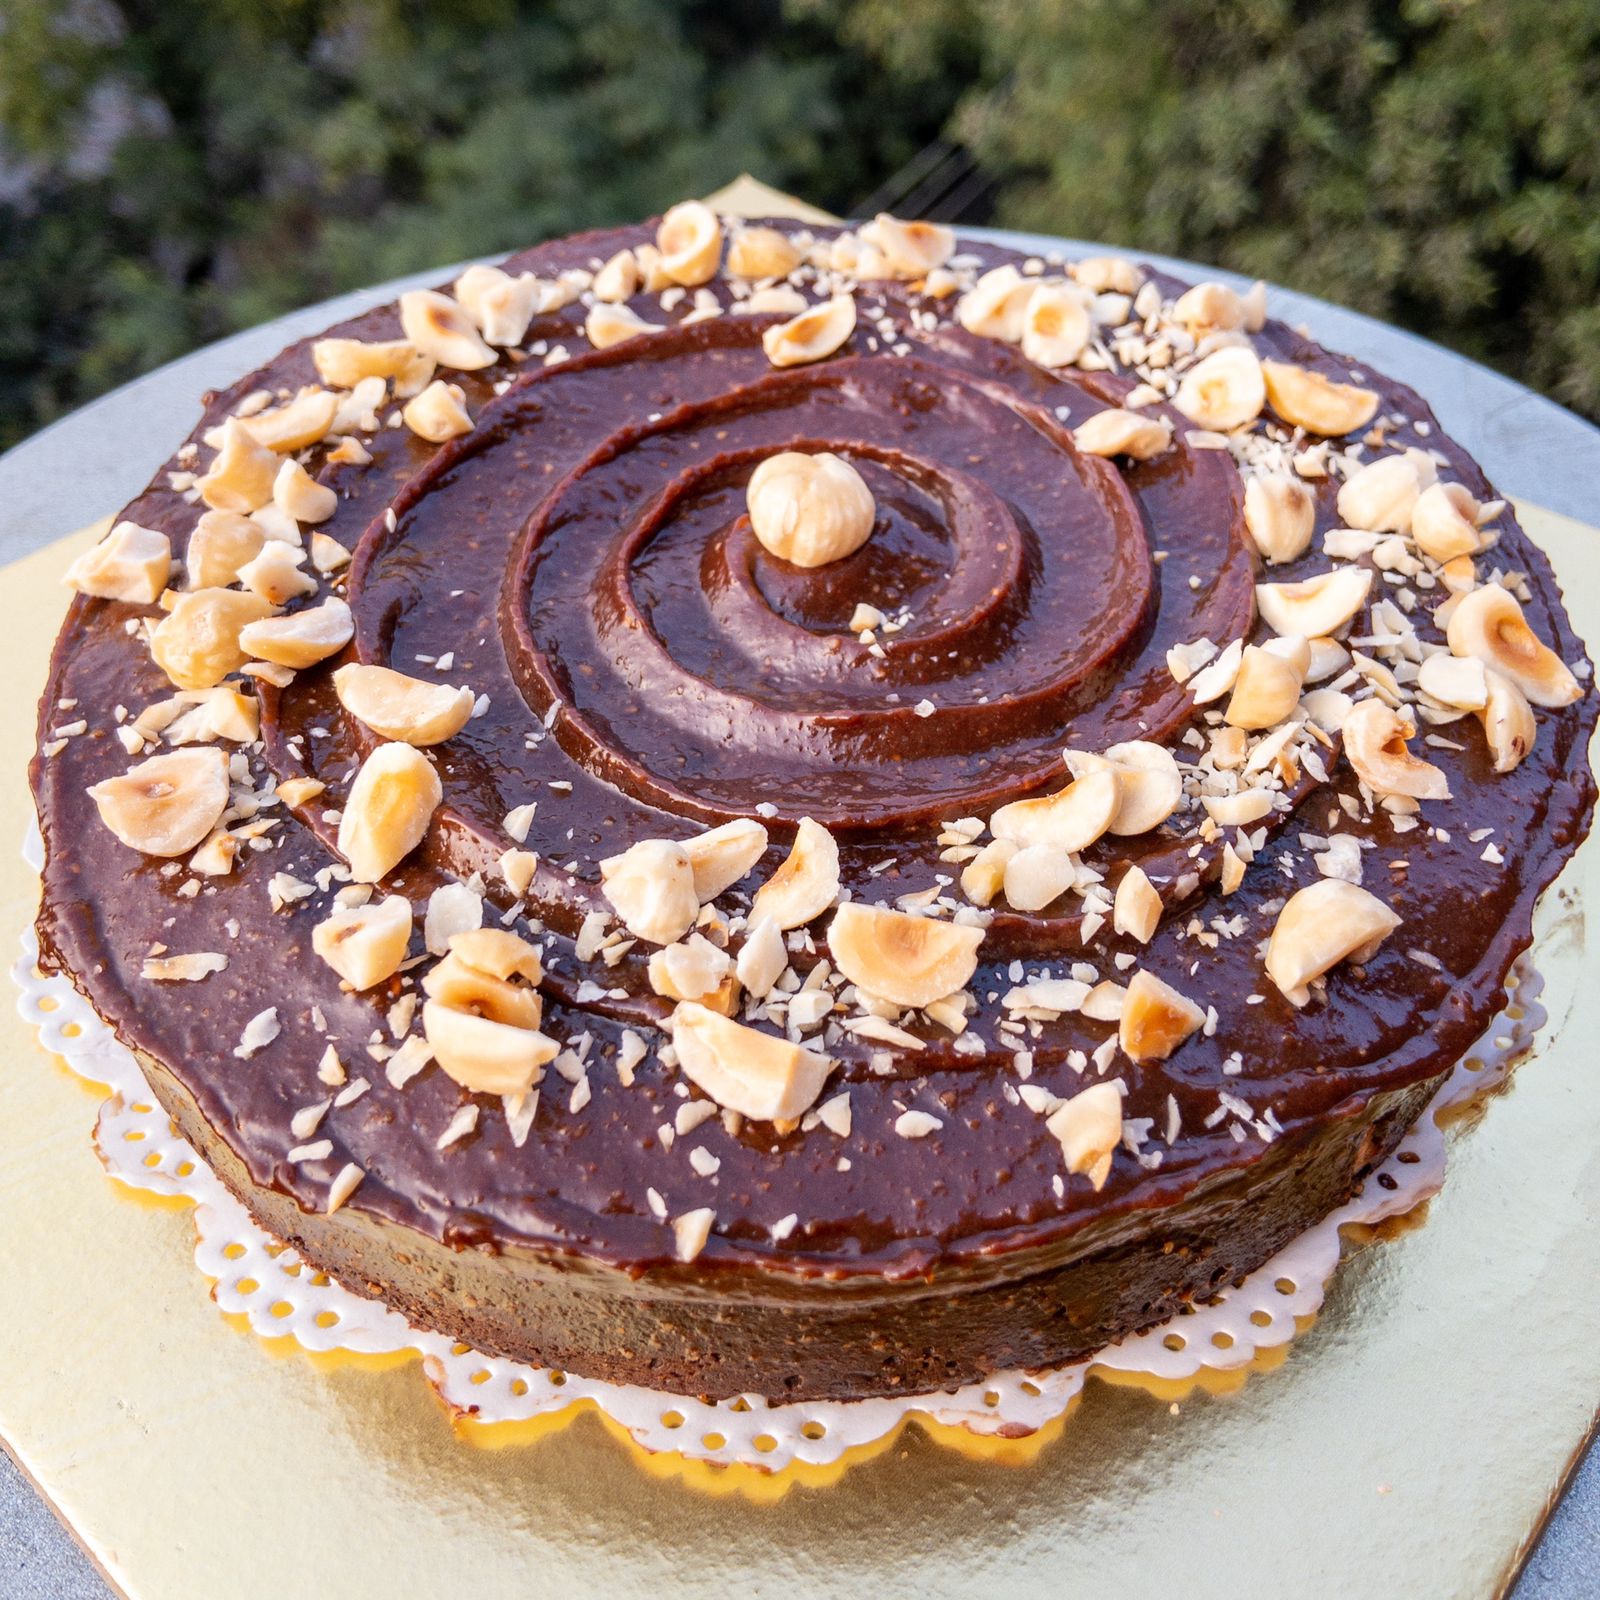 Almond joy cake 🍰 chocolate cake, coconut filling, almond butter cream |  Instagram